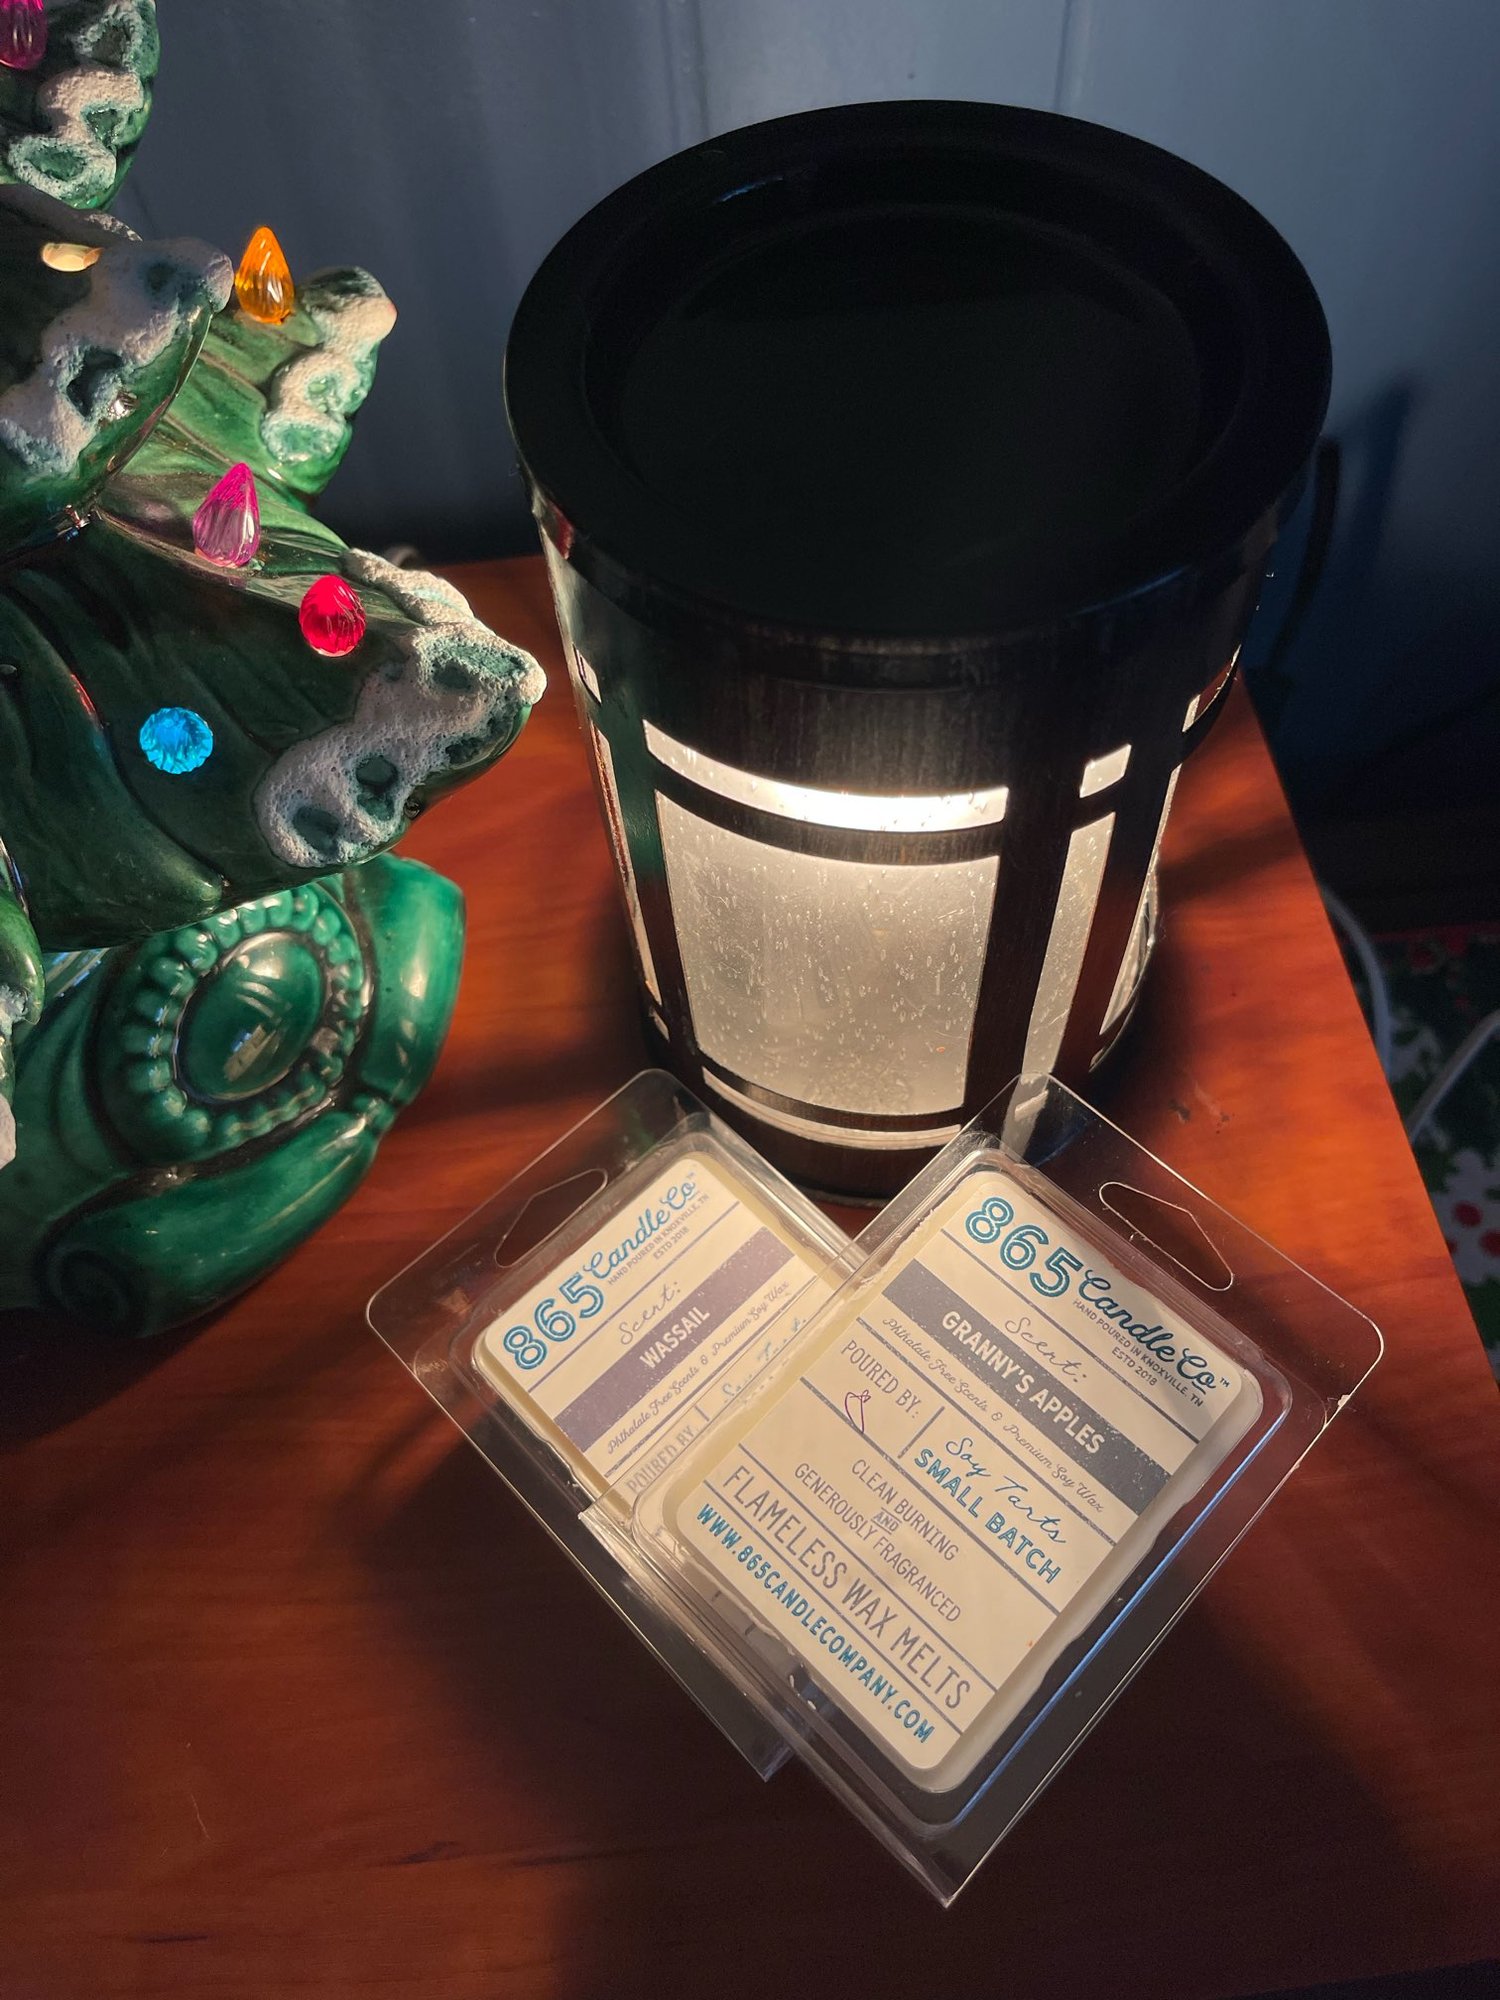 Electric Wax Melt Warmer Vintage Light Bulb